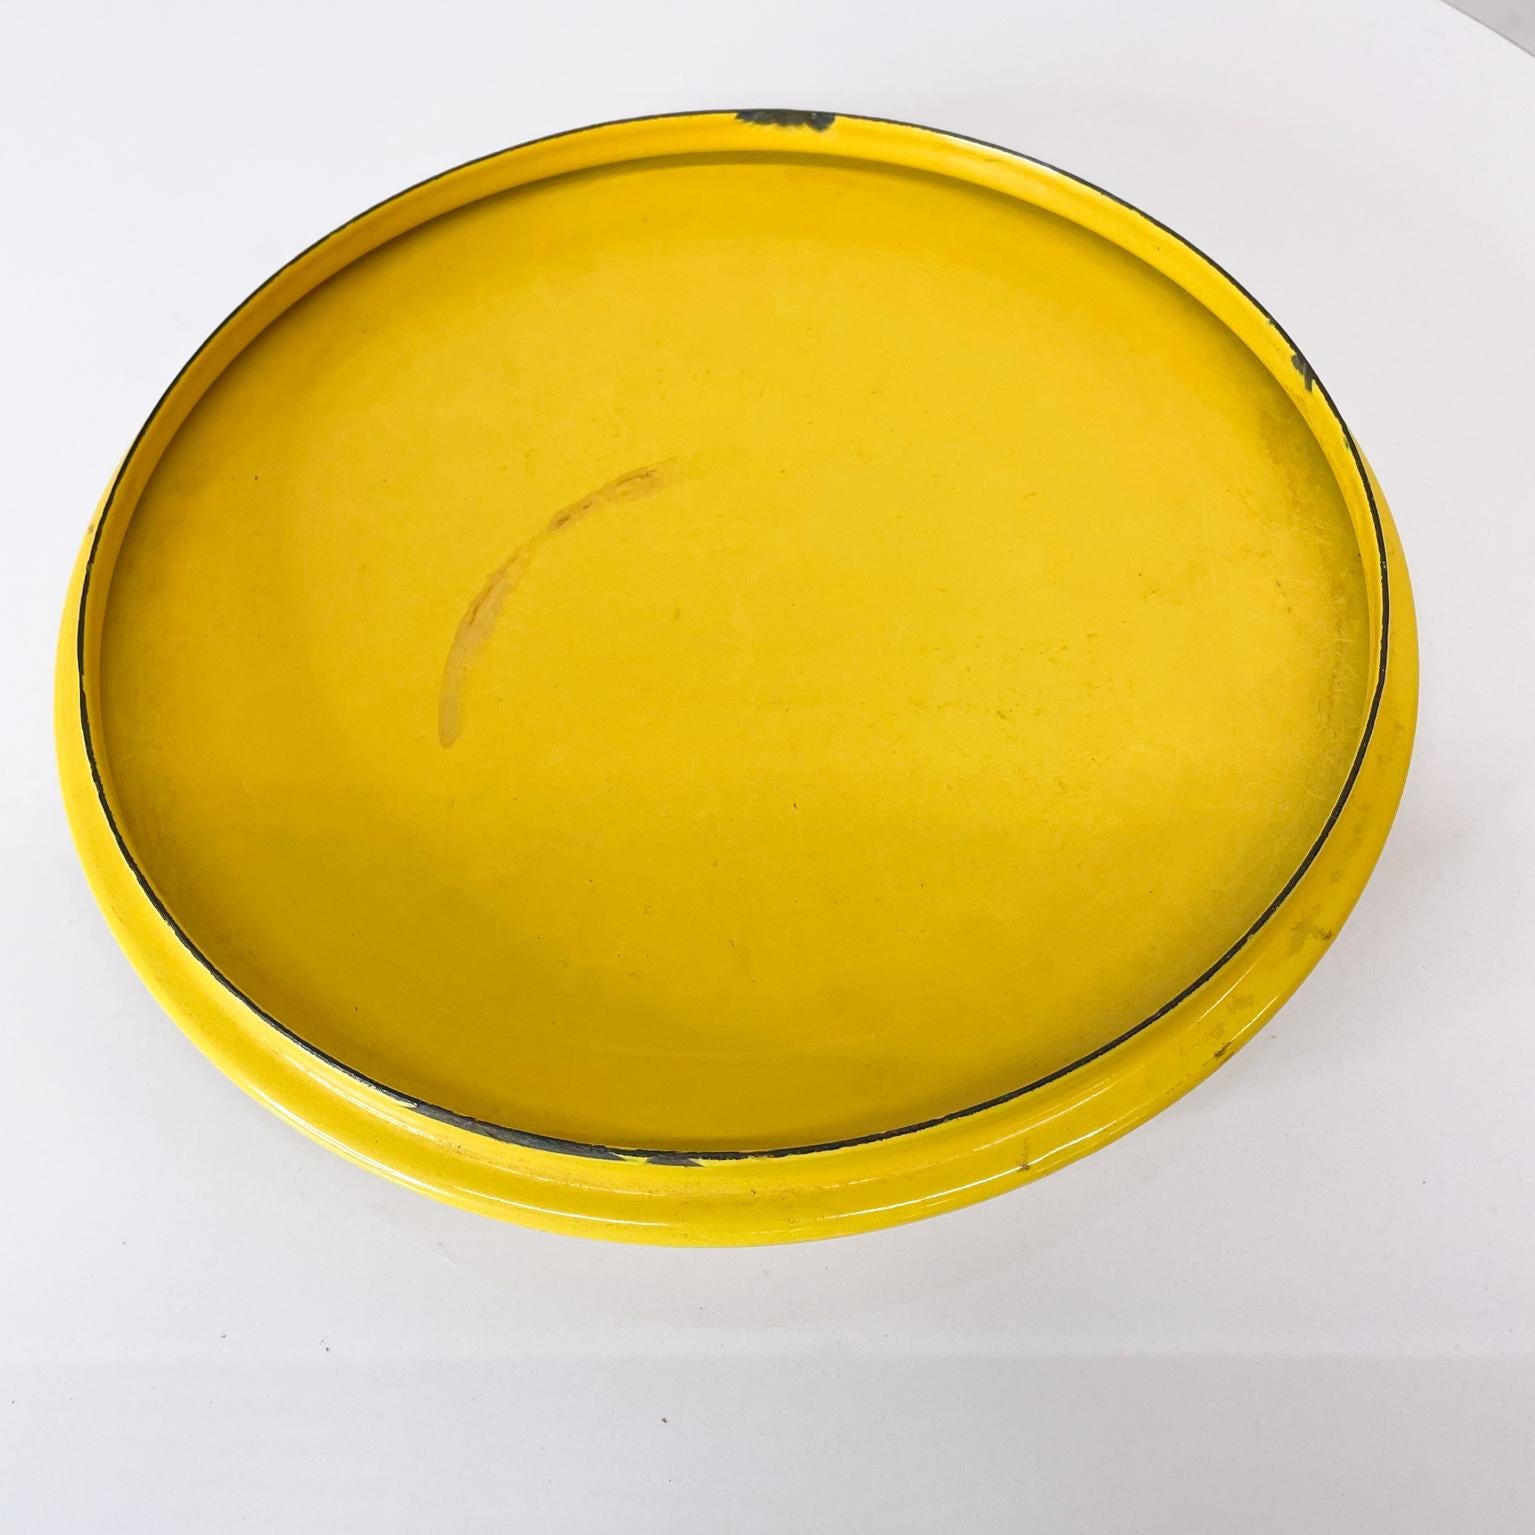 French Dansk Designs Yellow Enamelware Casserole Cover Lid Trivet Top IHQ France 1960s